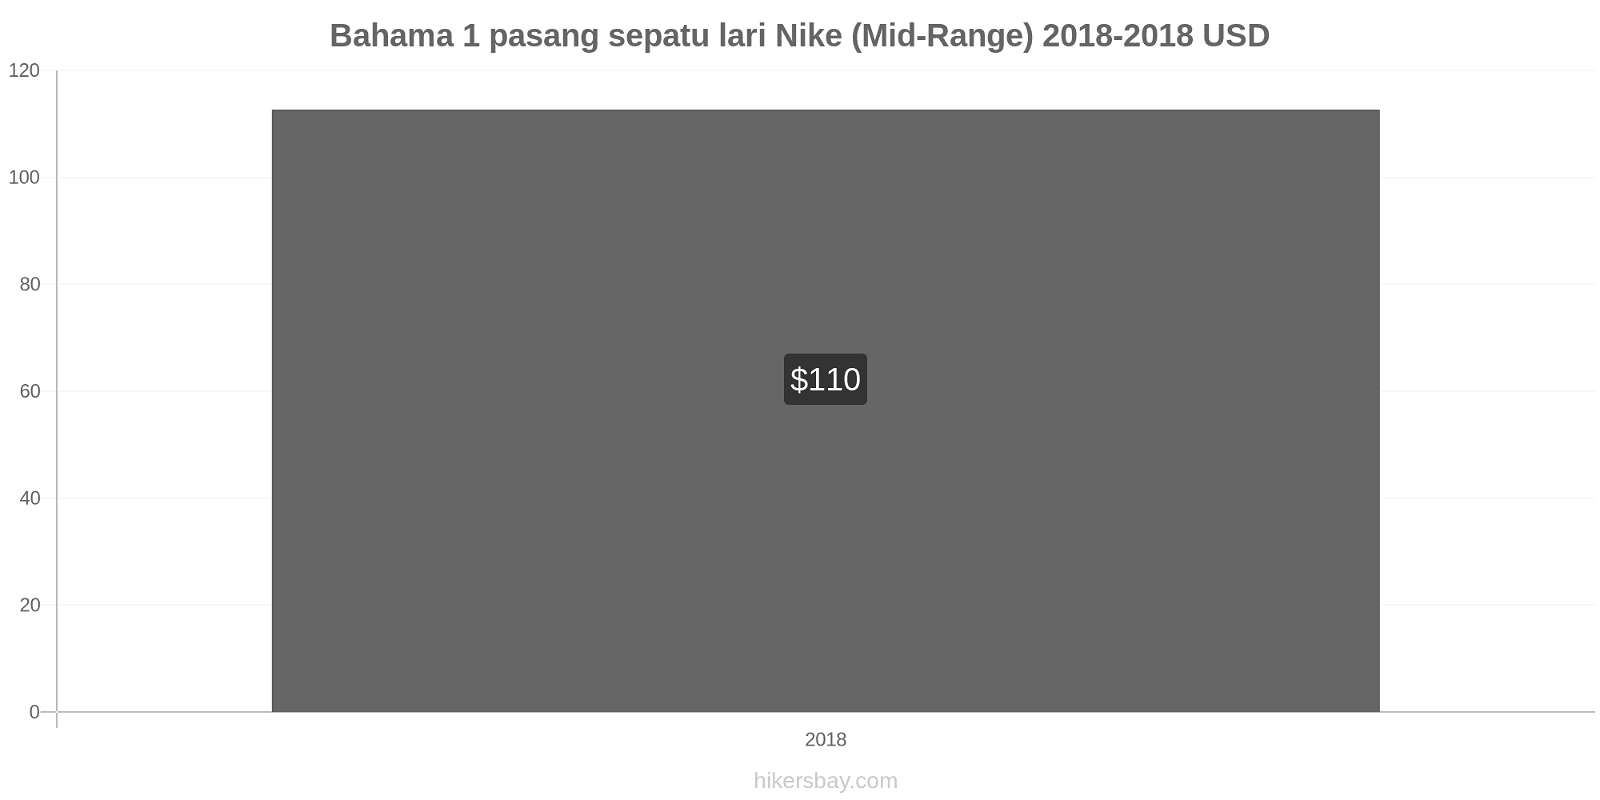 Bahama perubahan harga 1 pasang sepatu lari Nike (Mid-Range) hikersbay.com